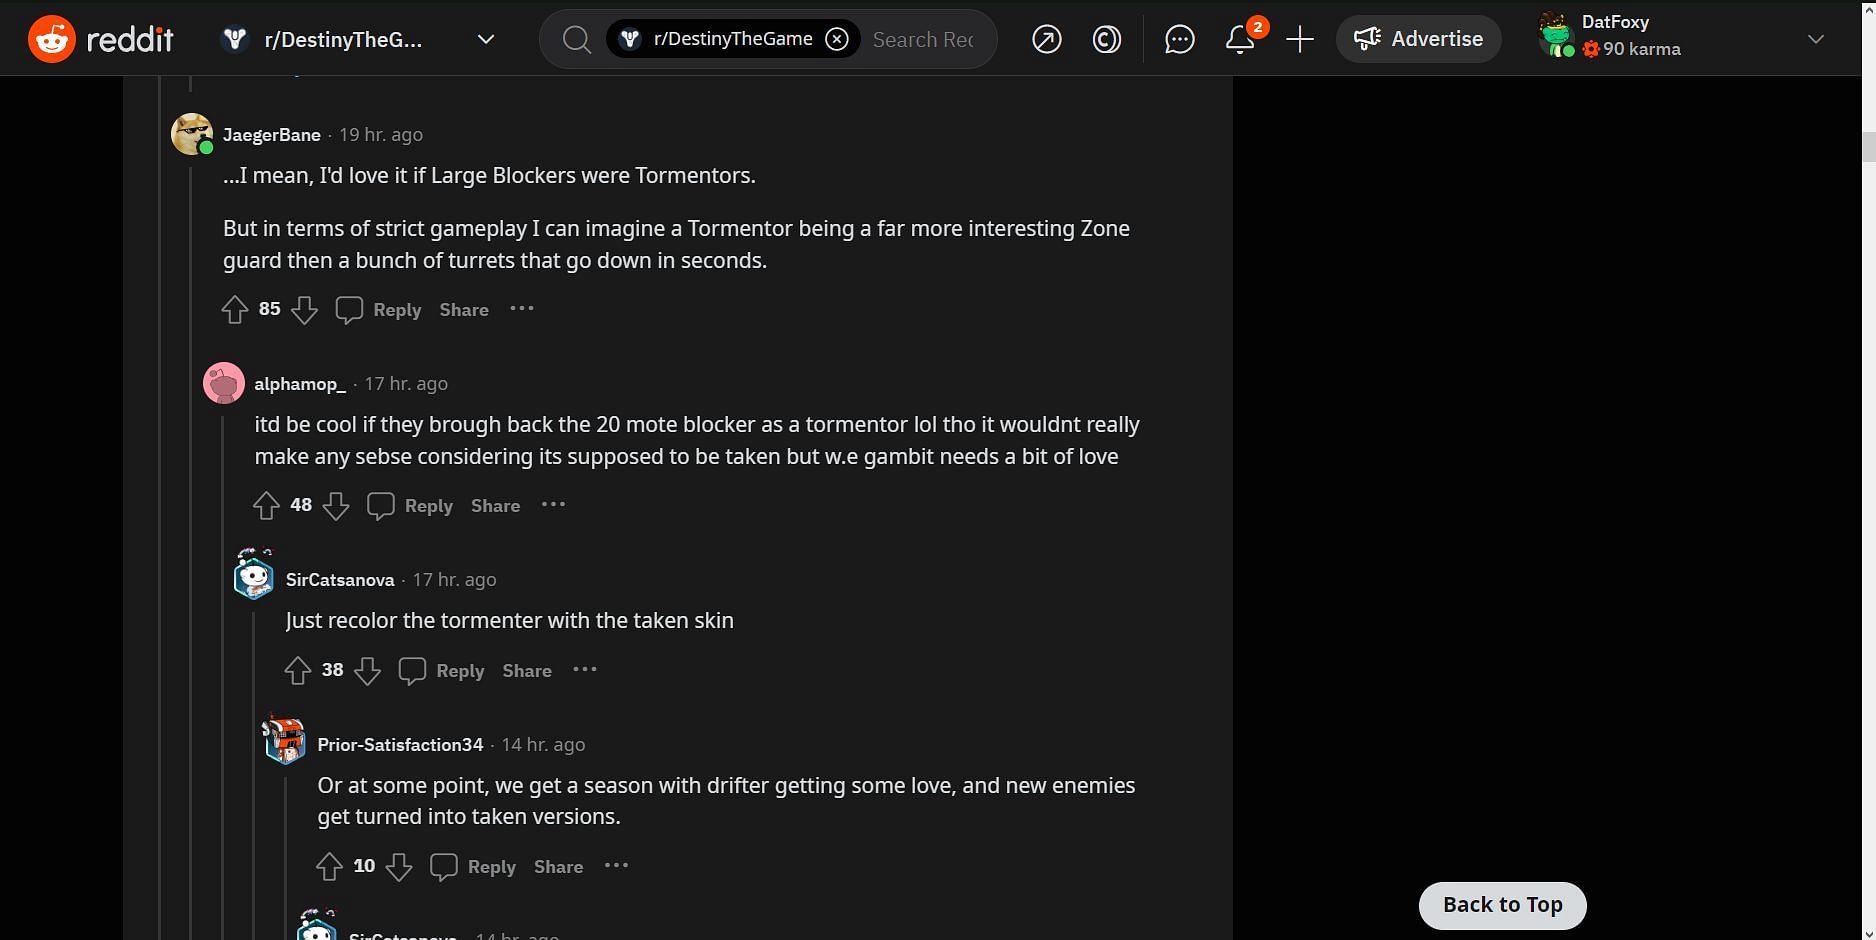 More comments on the Destiny 2 post (Image via Reddit)